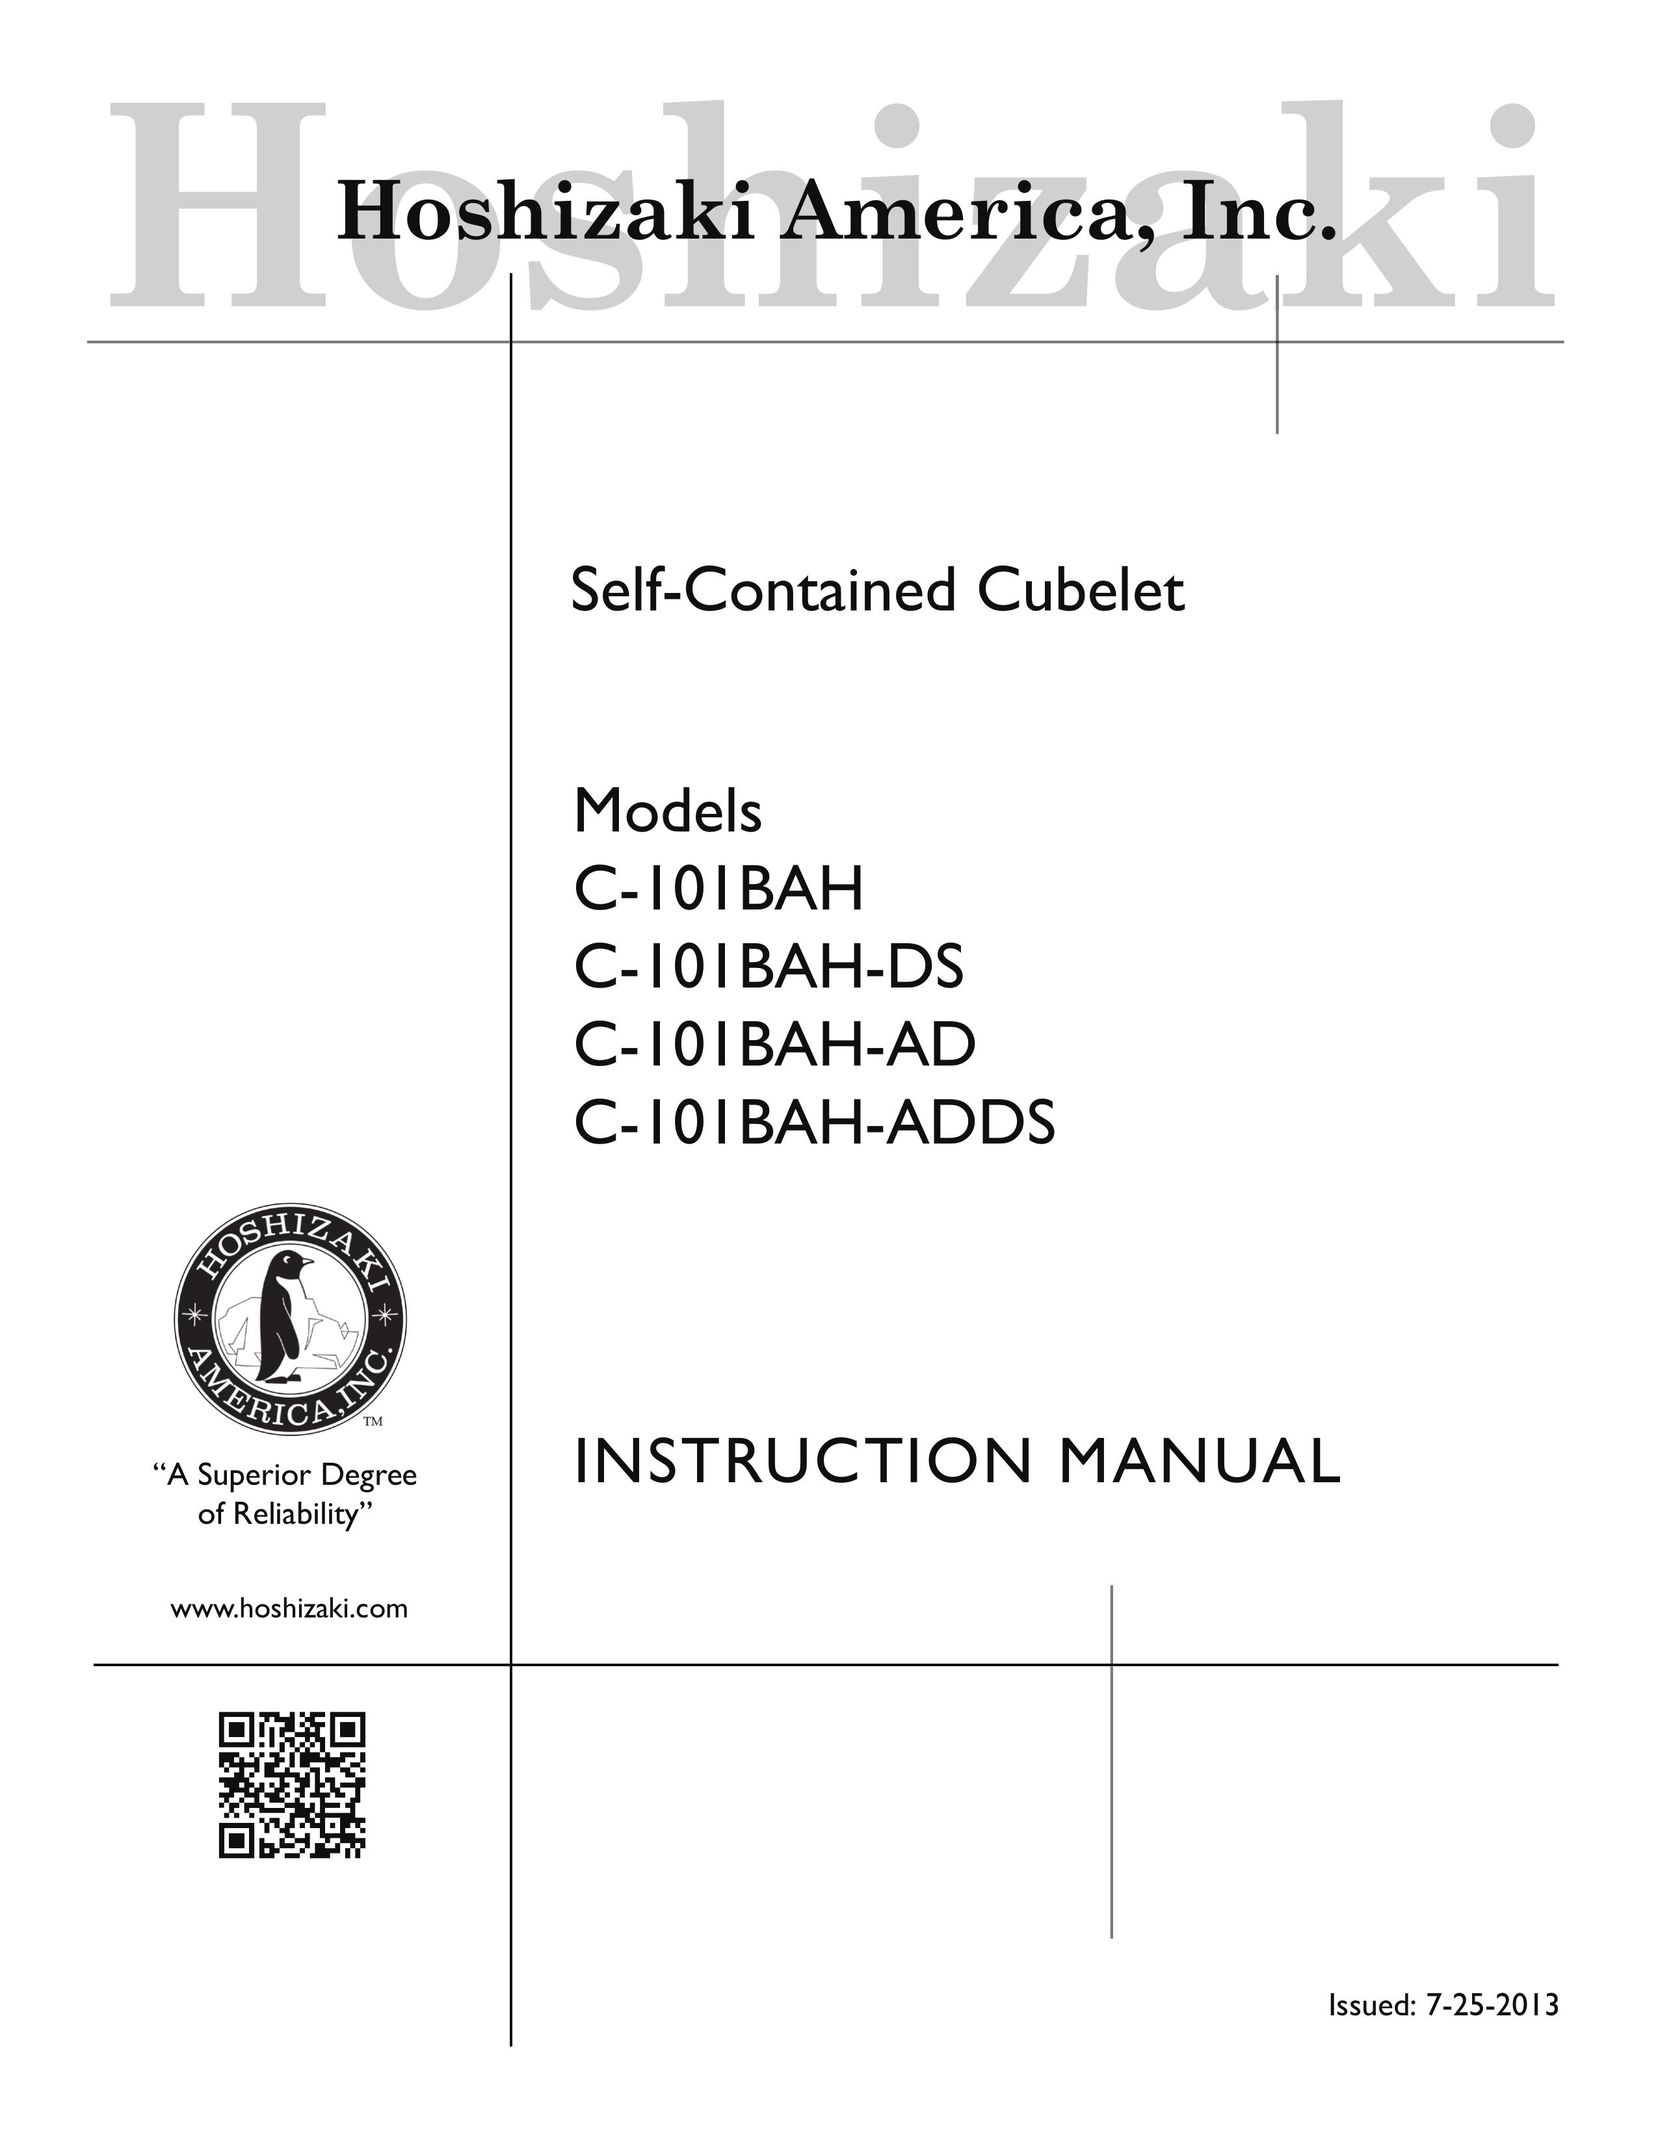 Hoshizaki C-101BAH-AD Freezer User Manual